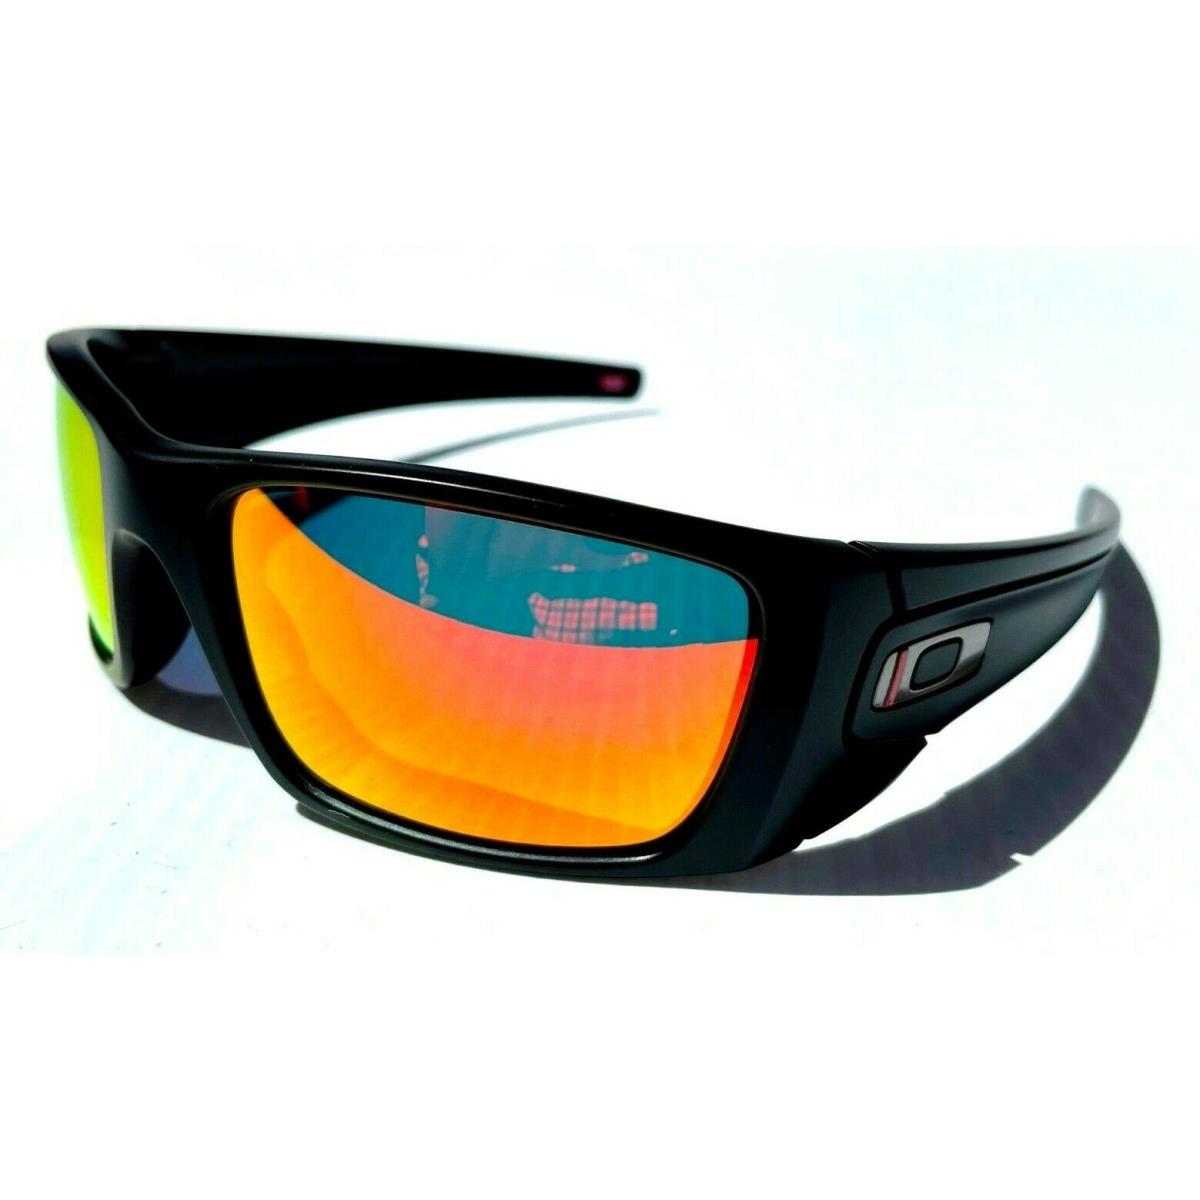 Oakley sunglasses Fuel Cell - Black Frame, Red Lens 6